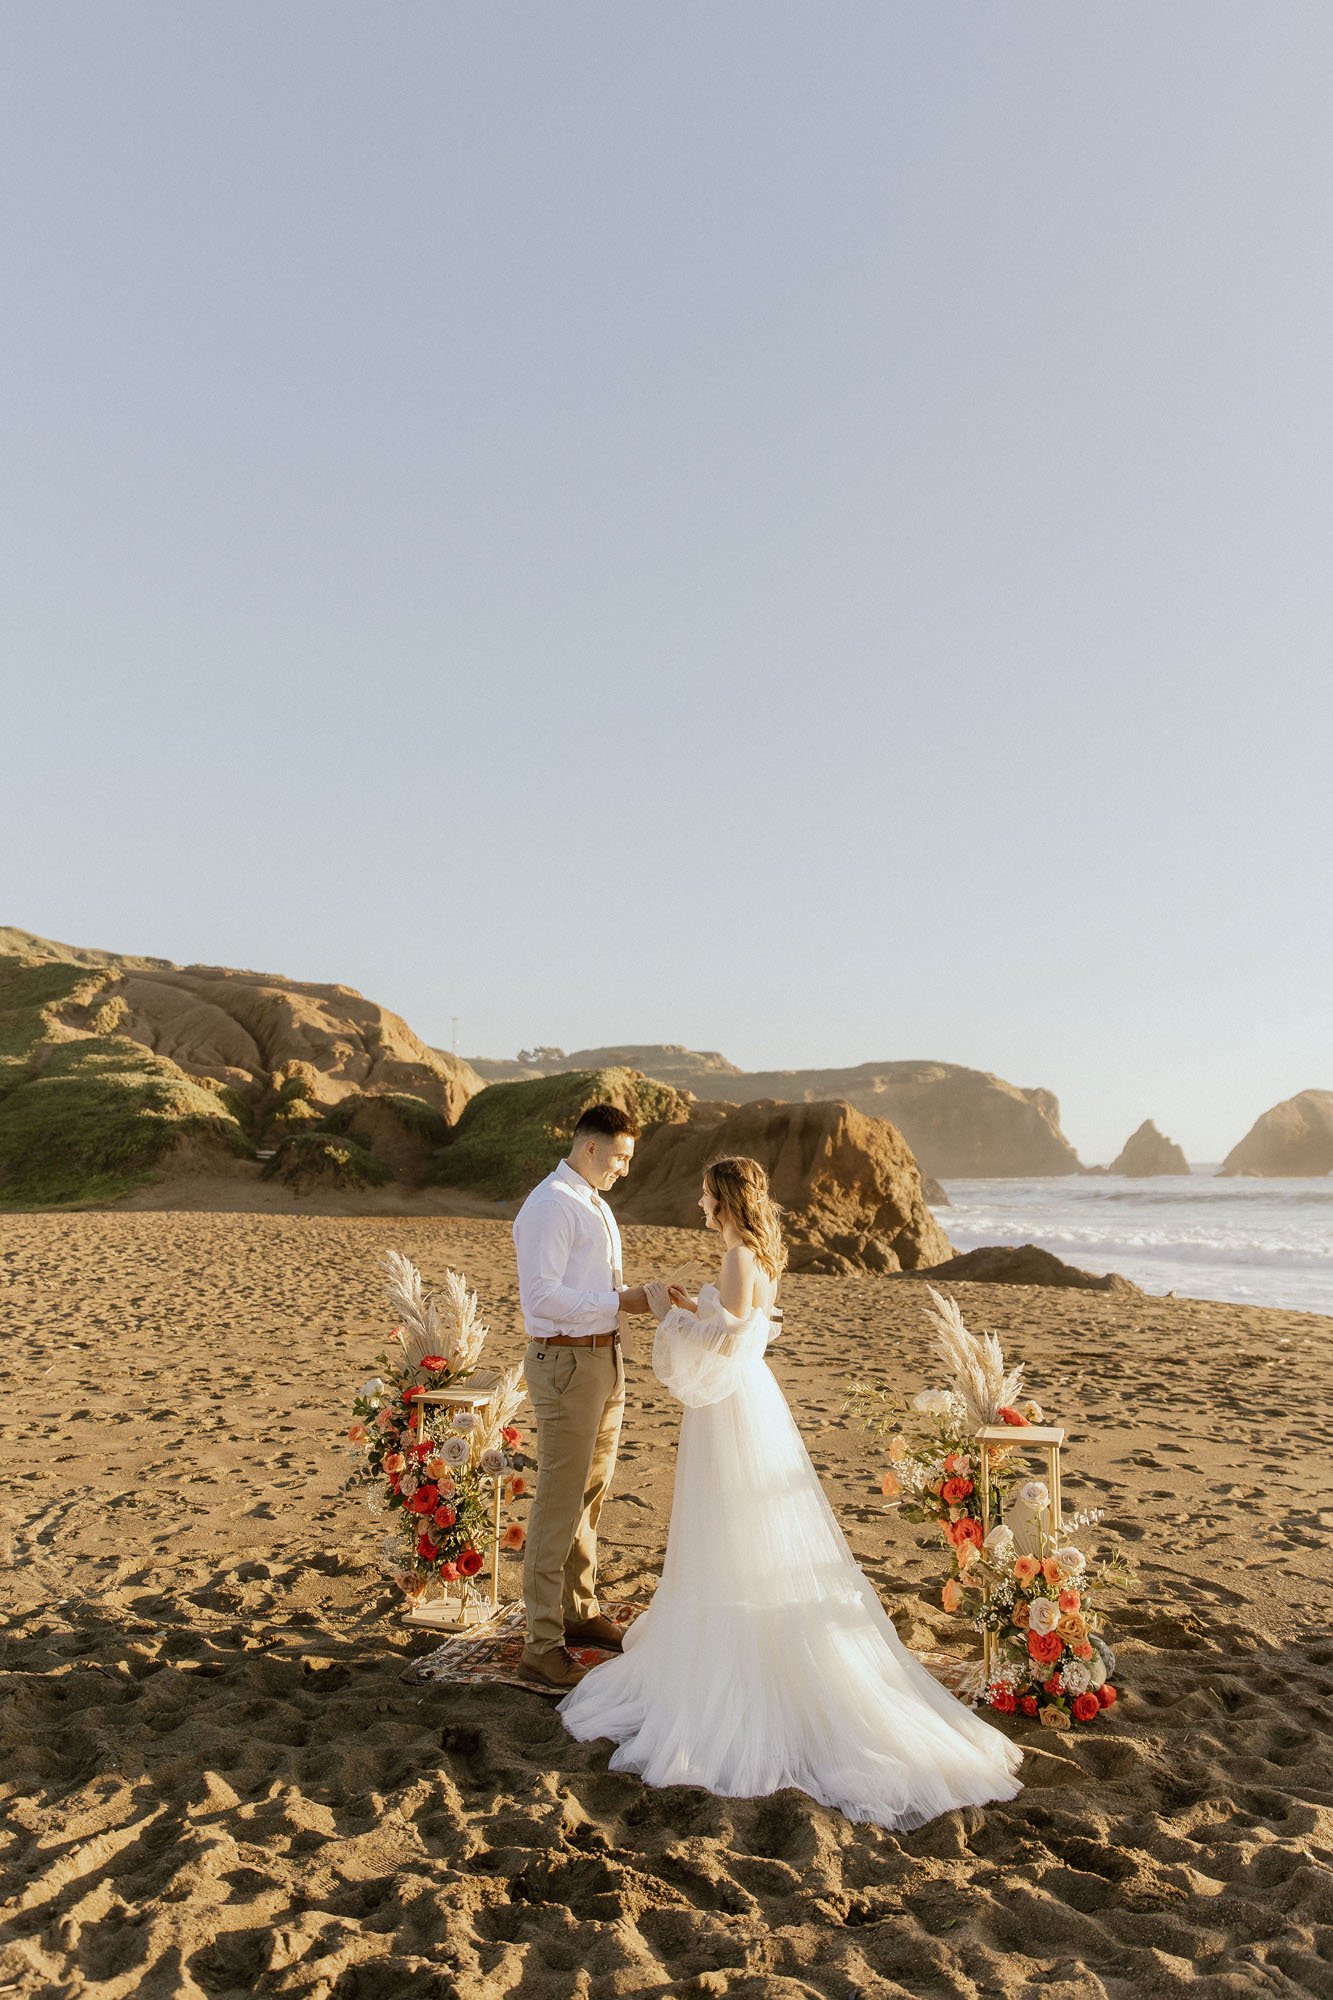 Alena-Leena-Armeria-Wedding-Dress-Rodeo-Beach-Elopement-06.jpg